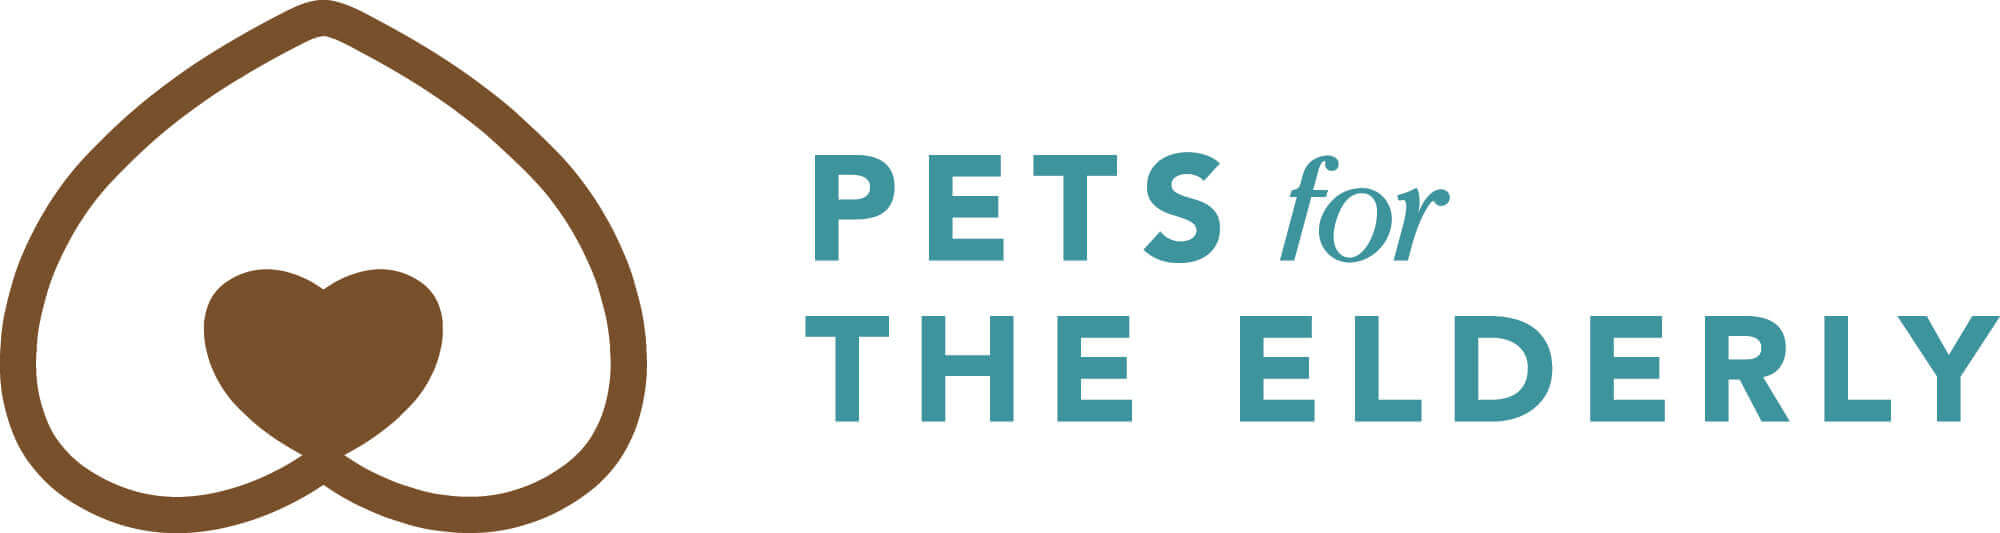 pets for the elderly logo